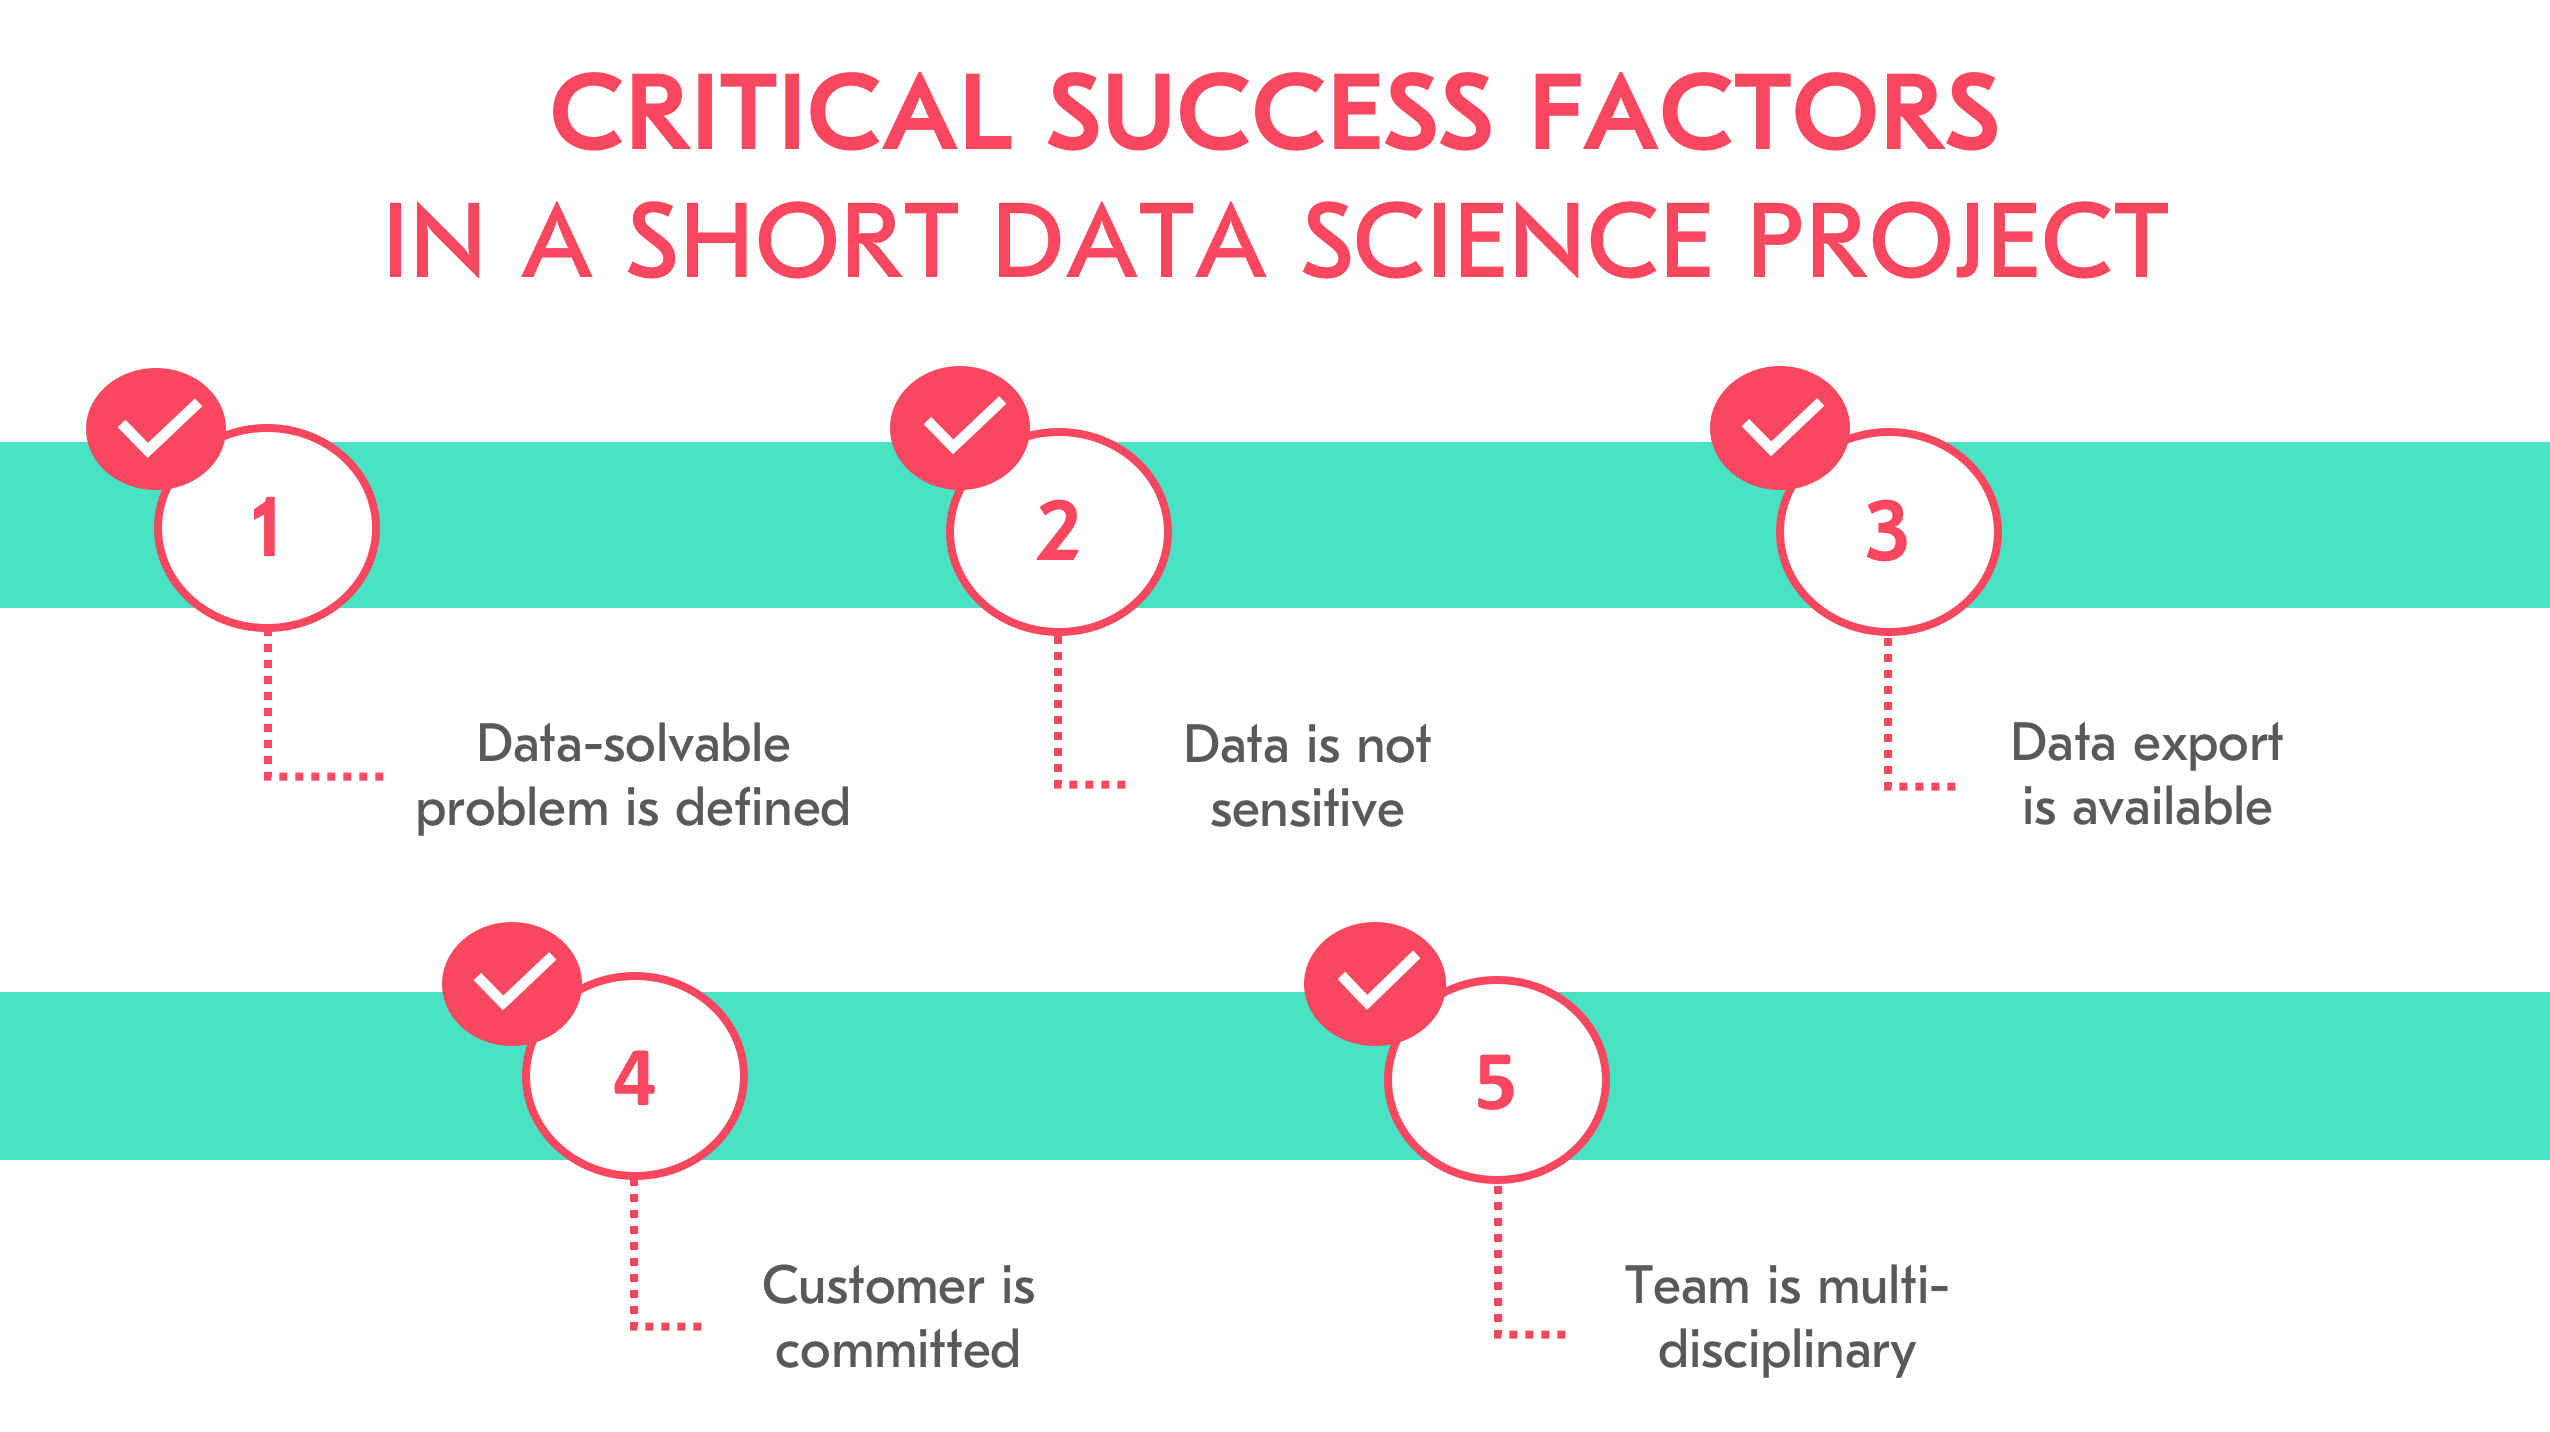 Critical success factors in a short data science project